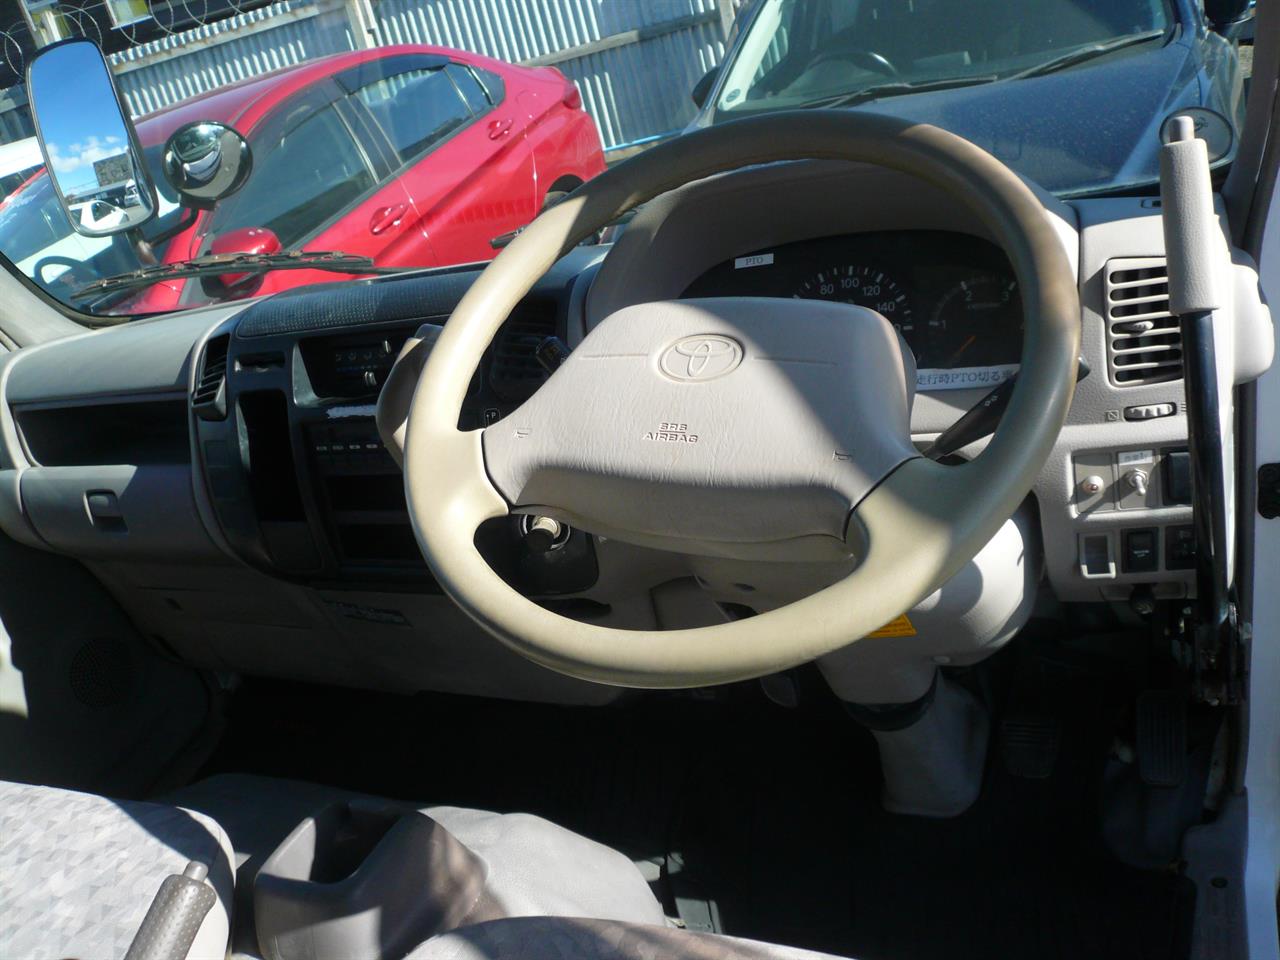 2006 Toyota Dyna tip truck